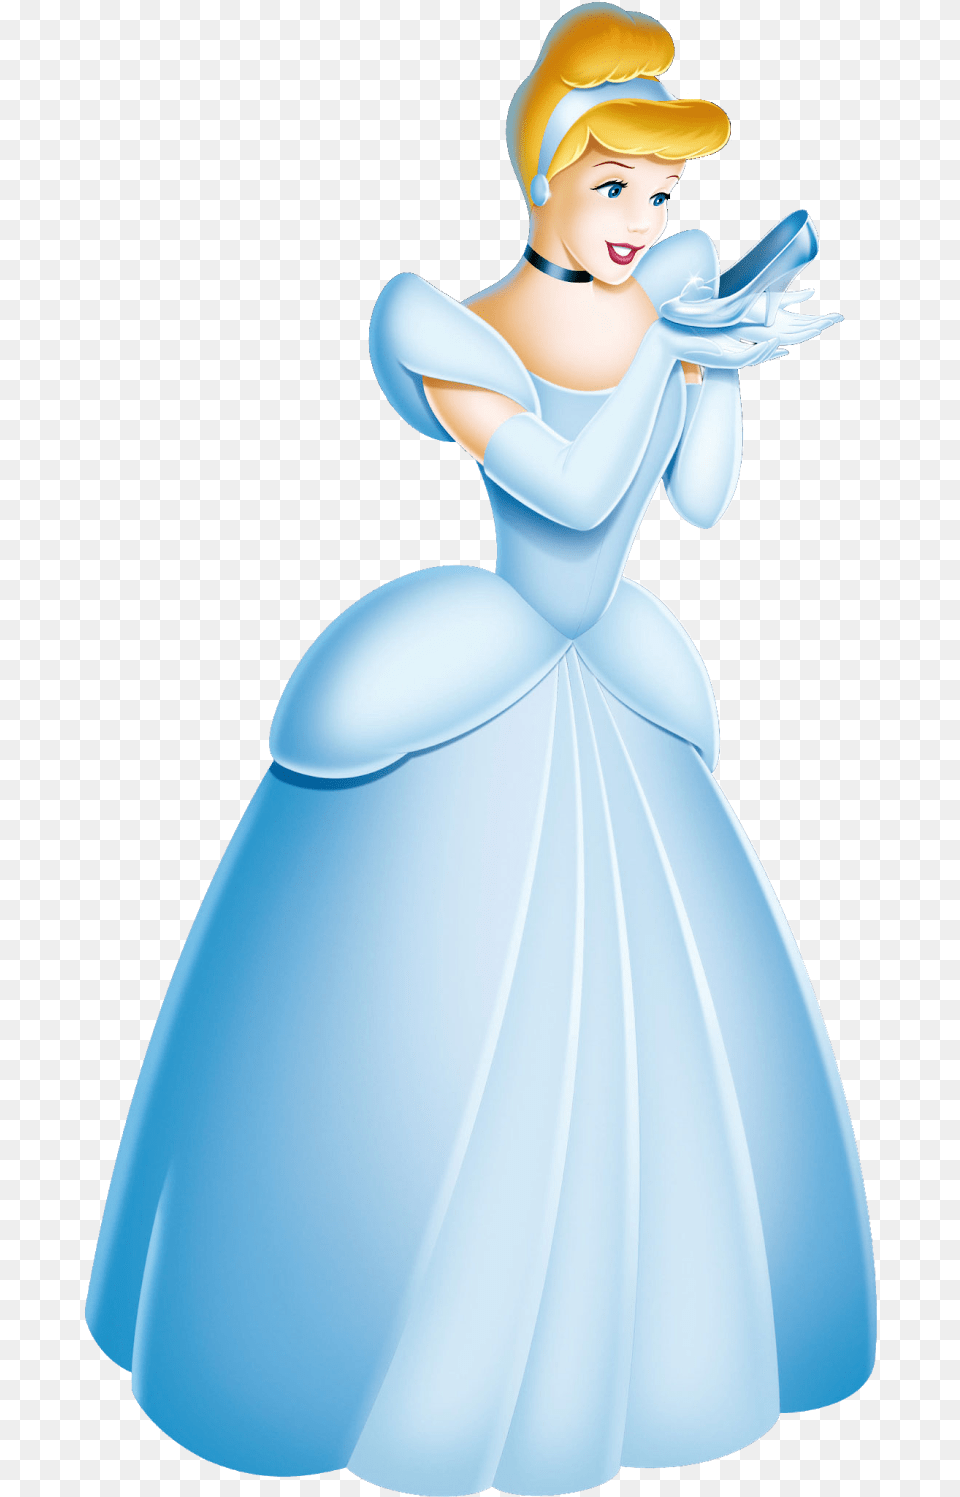 Cinderella Clipart Disney Cinderella Holding Glass Slipper, Clothing, Dress, Formal Wear, Adult Png Image